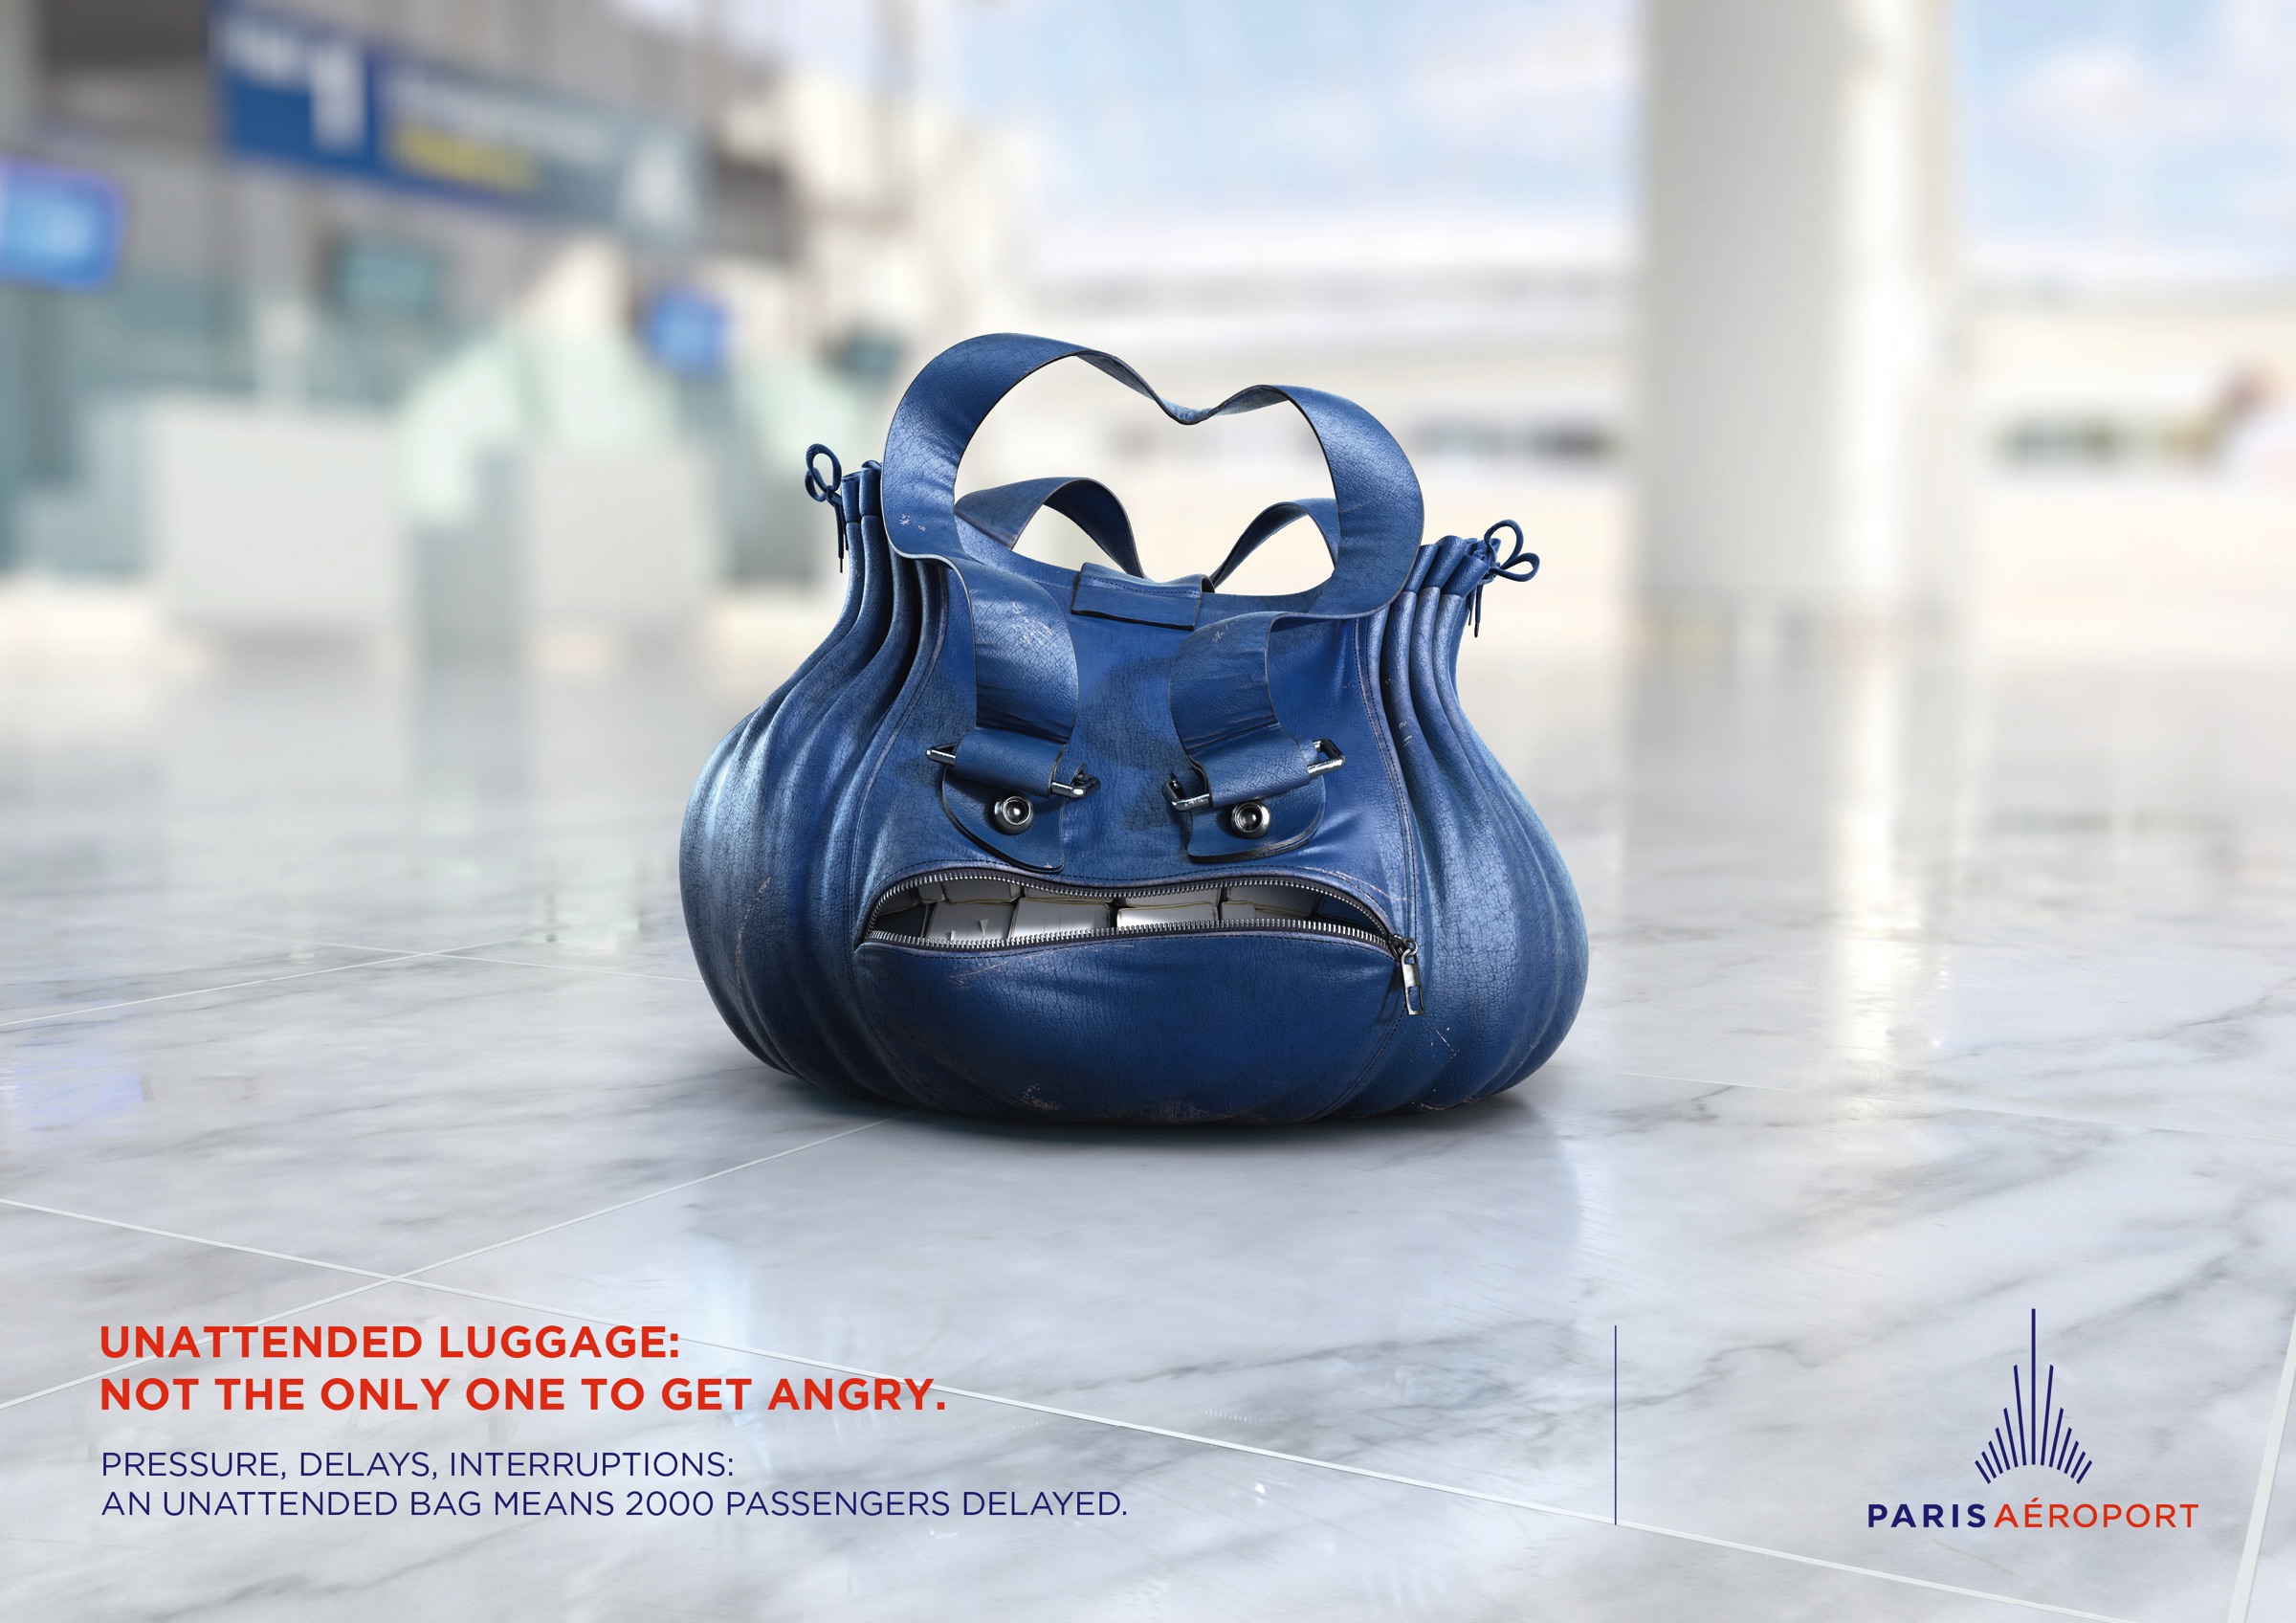 Paris Aéroport “Angry Bags” Campaign